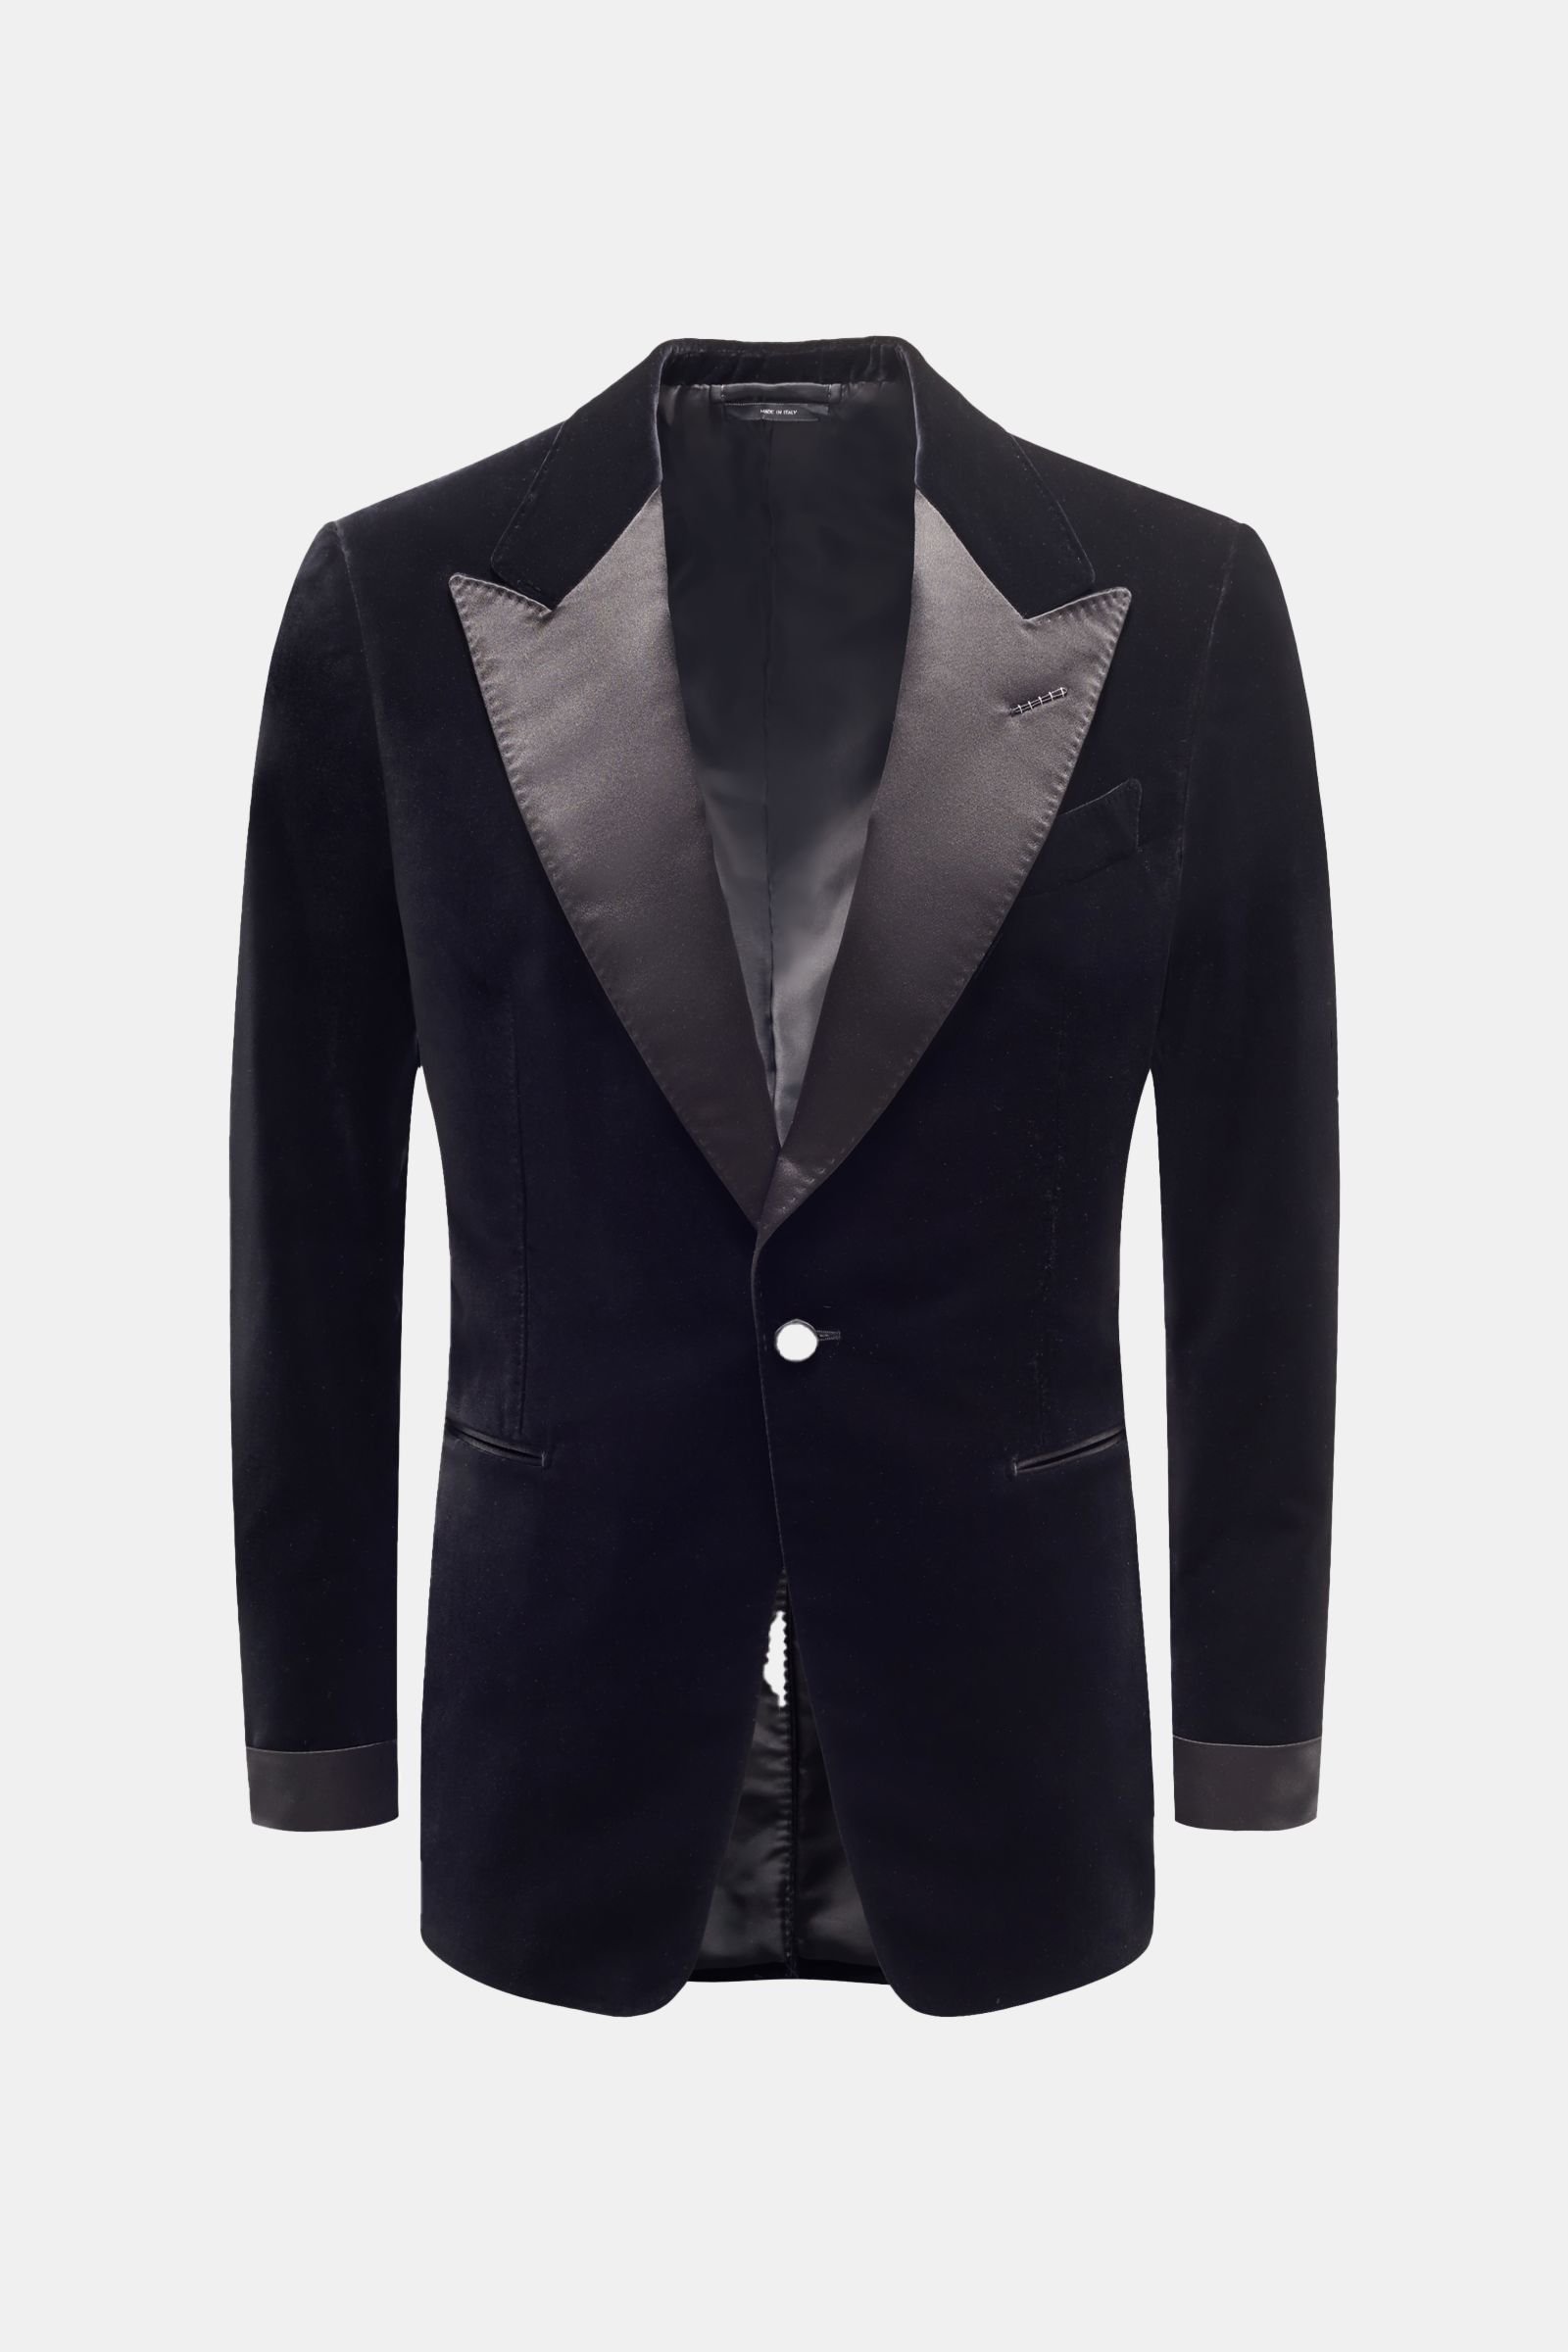 TOM FORD tuxedo smart-casual jacket black | BRAUN Hamburg